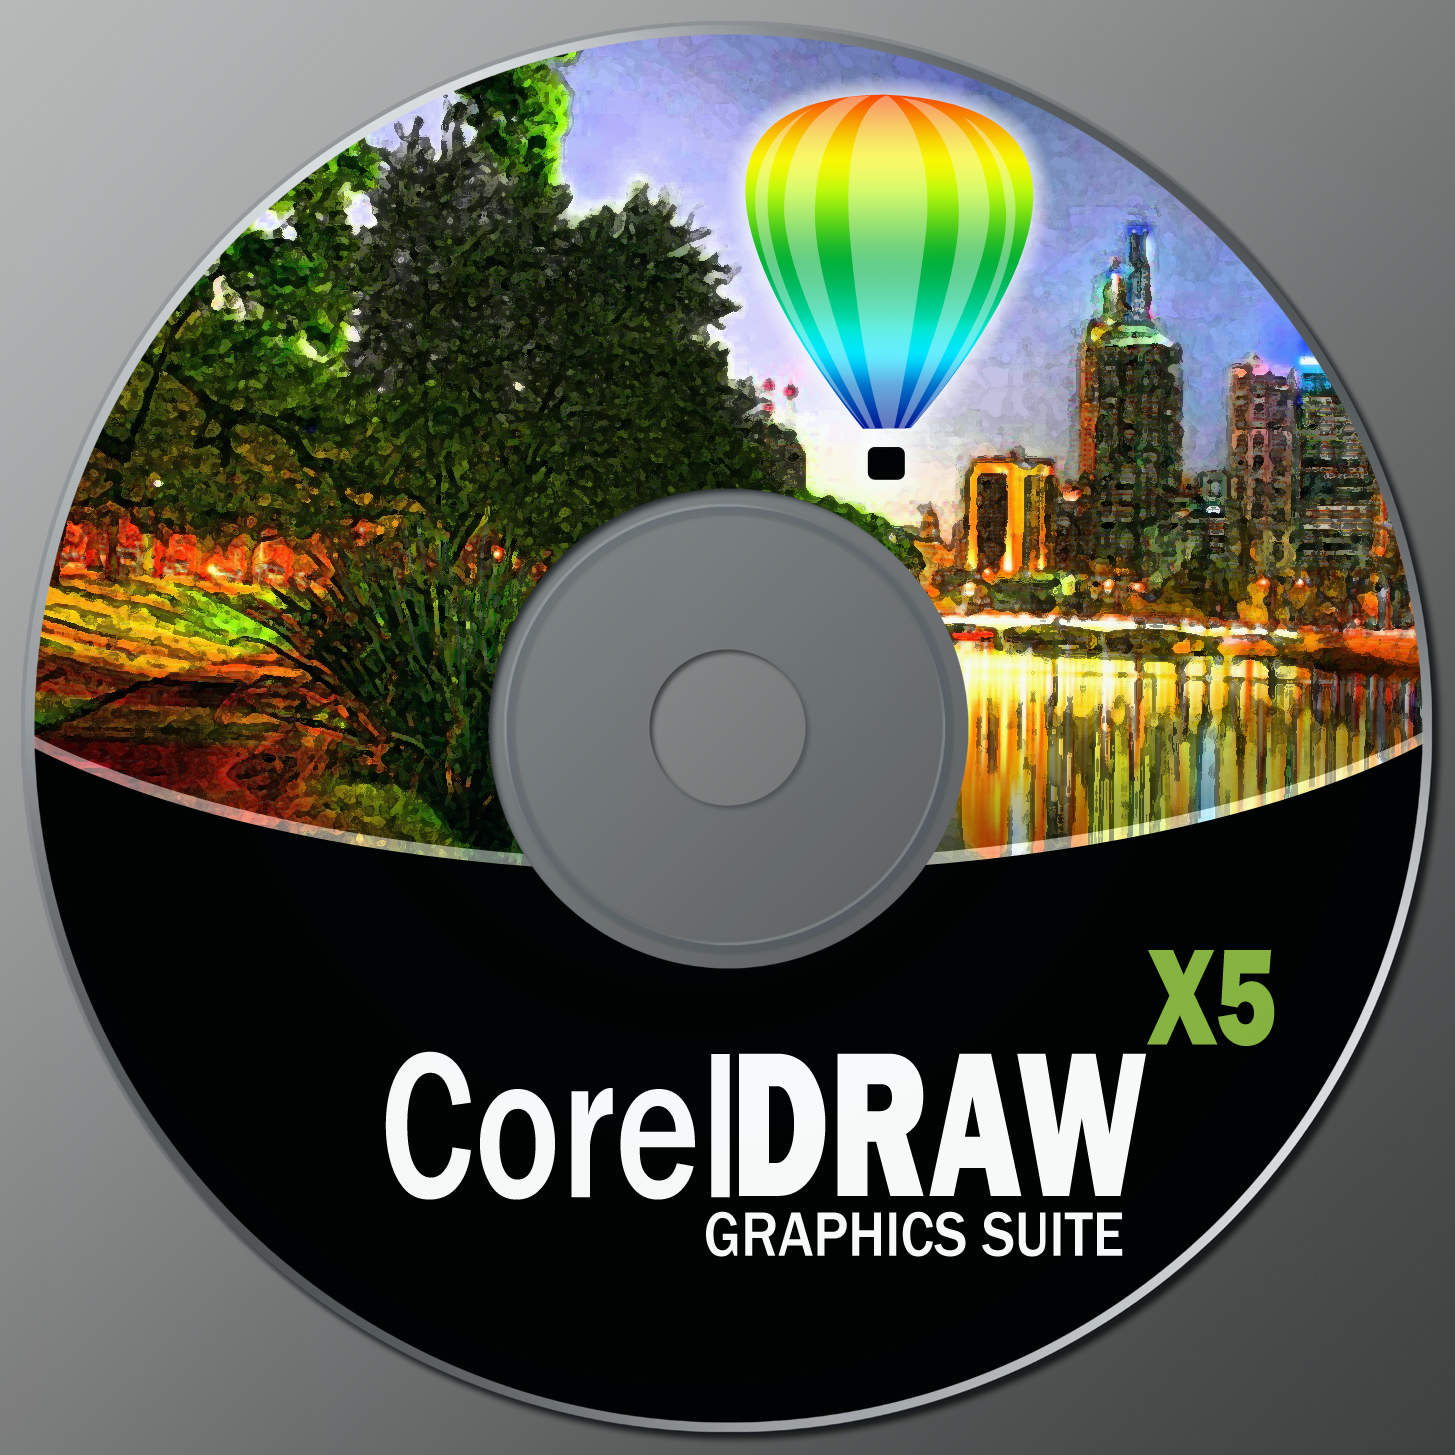 coreldraw x5 free download old version